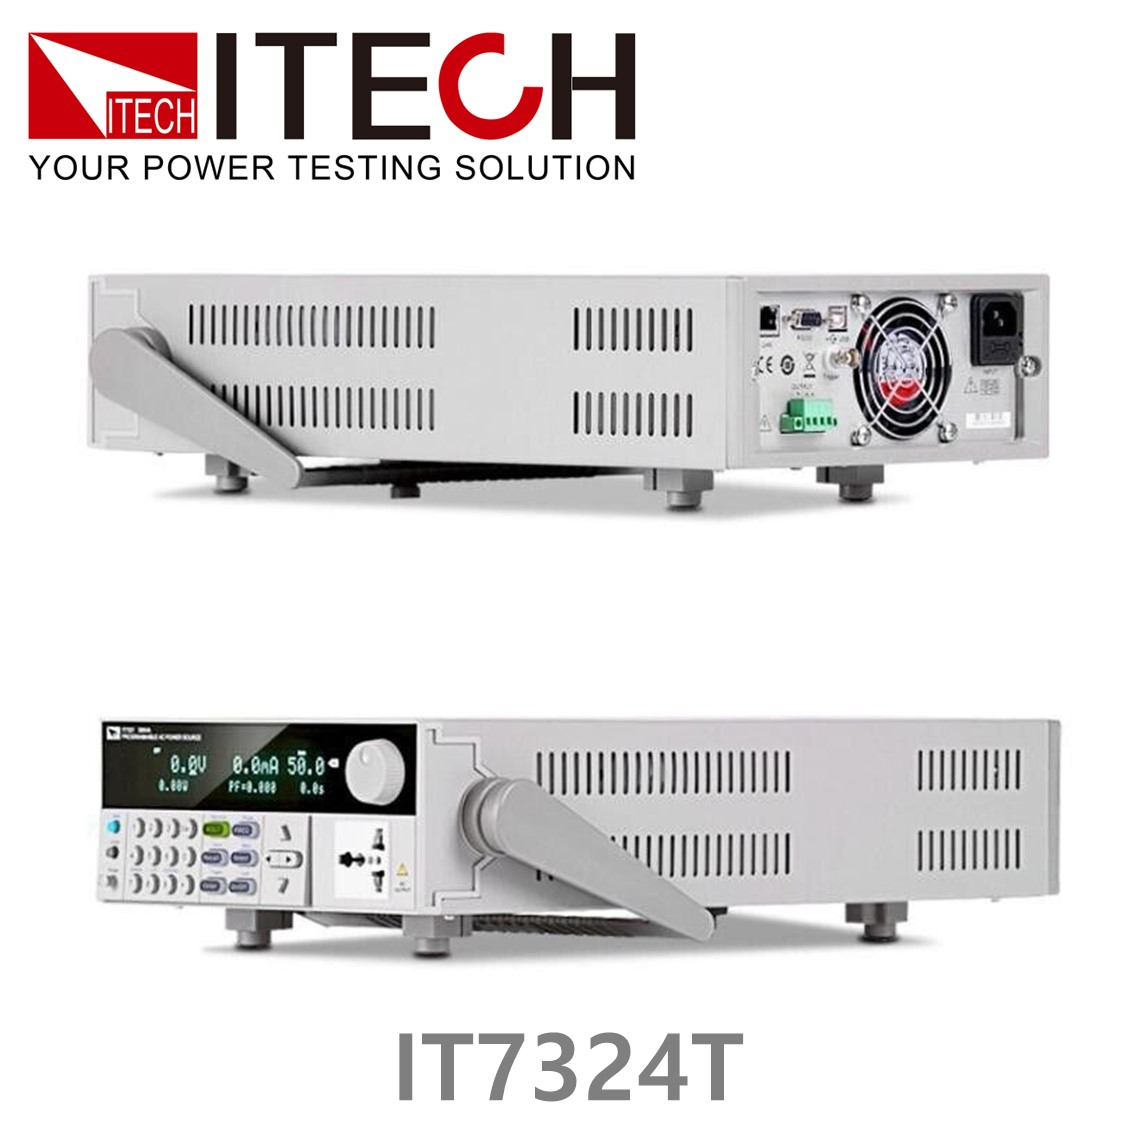 [ ITECH ] IT7324T  리니어 프로그래머블 AC전원공급기 150V/300V - 12A/6A -4500VA (3φ) (15U)